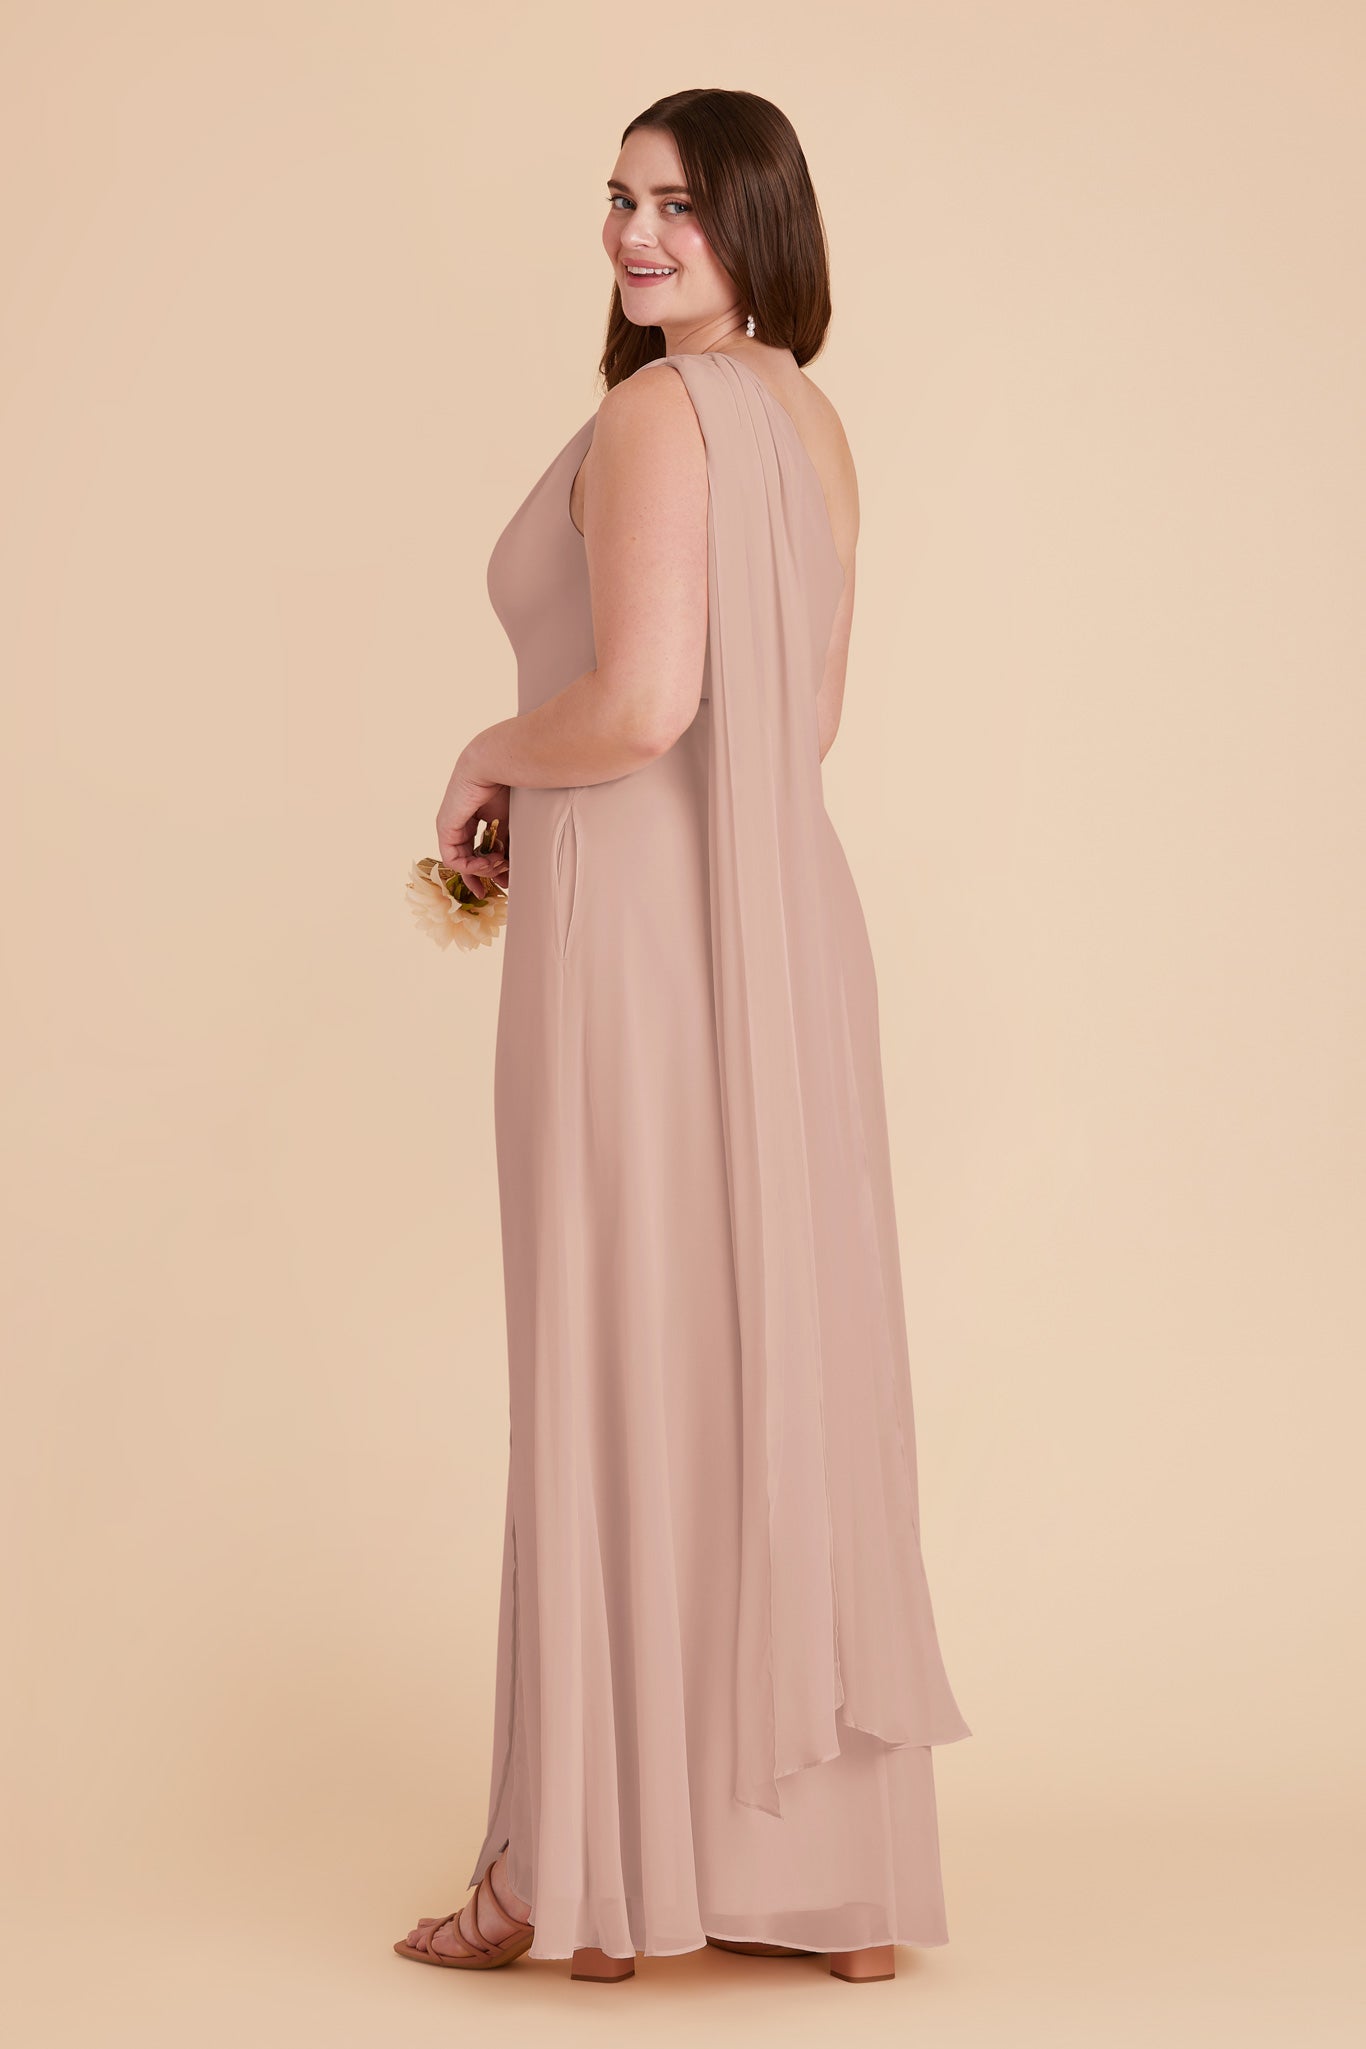 Taupe Melissa Chiffon Dress by Birdy Grey